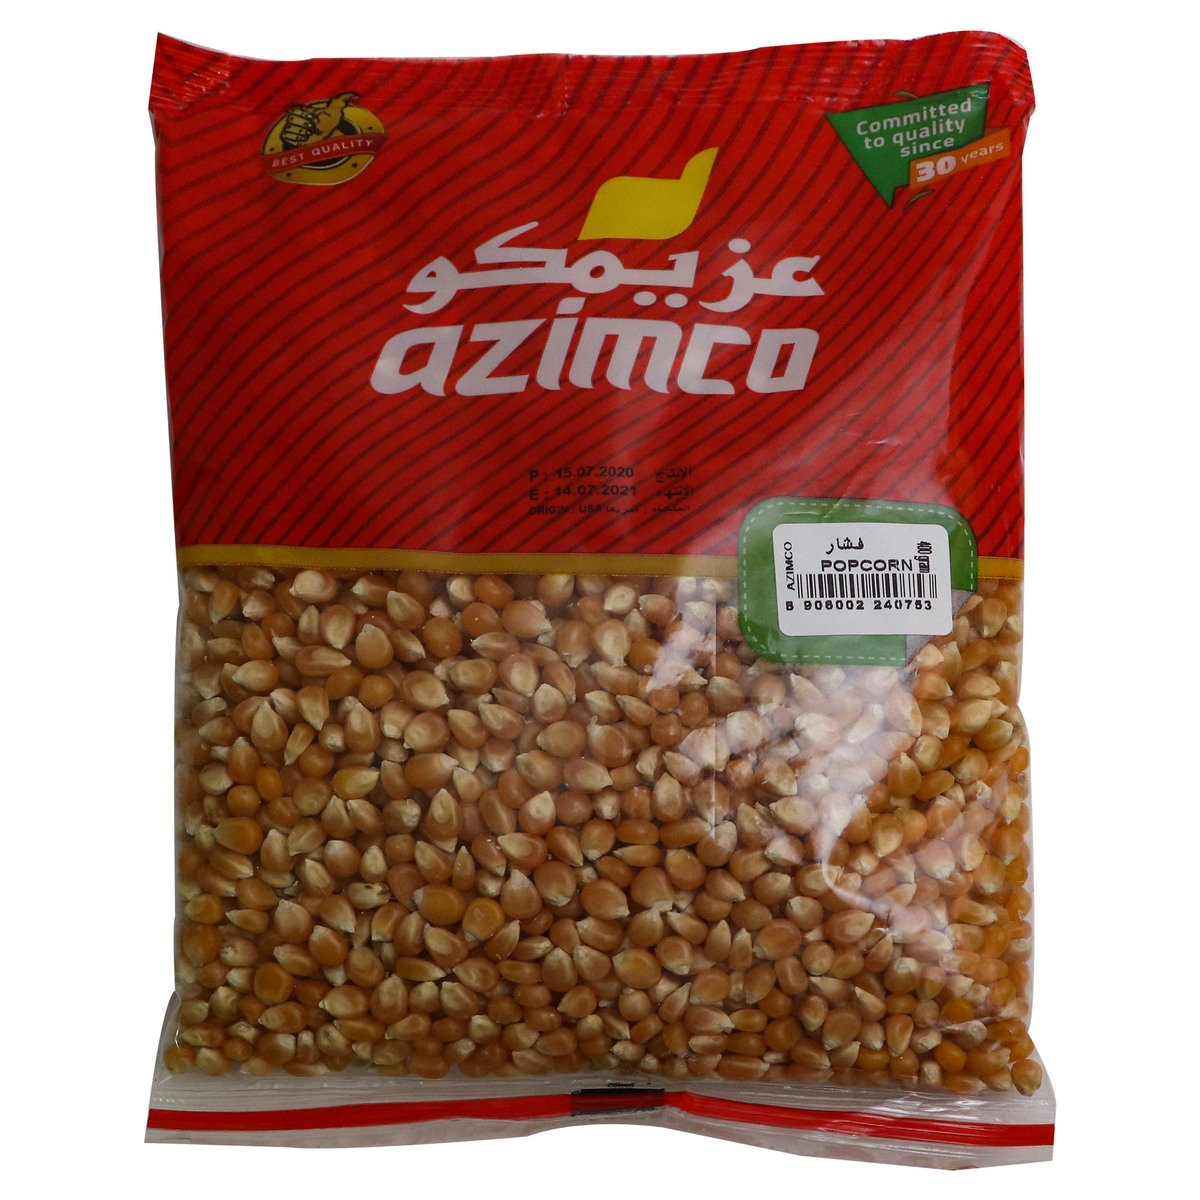 Azimco Popcorn 400g